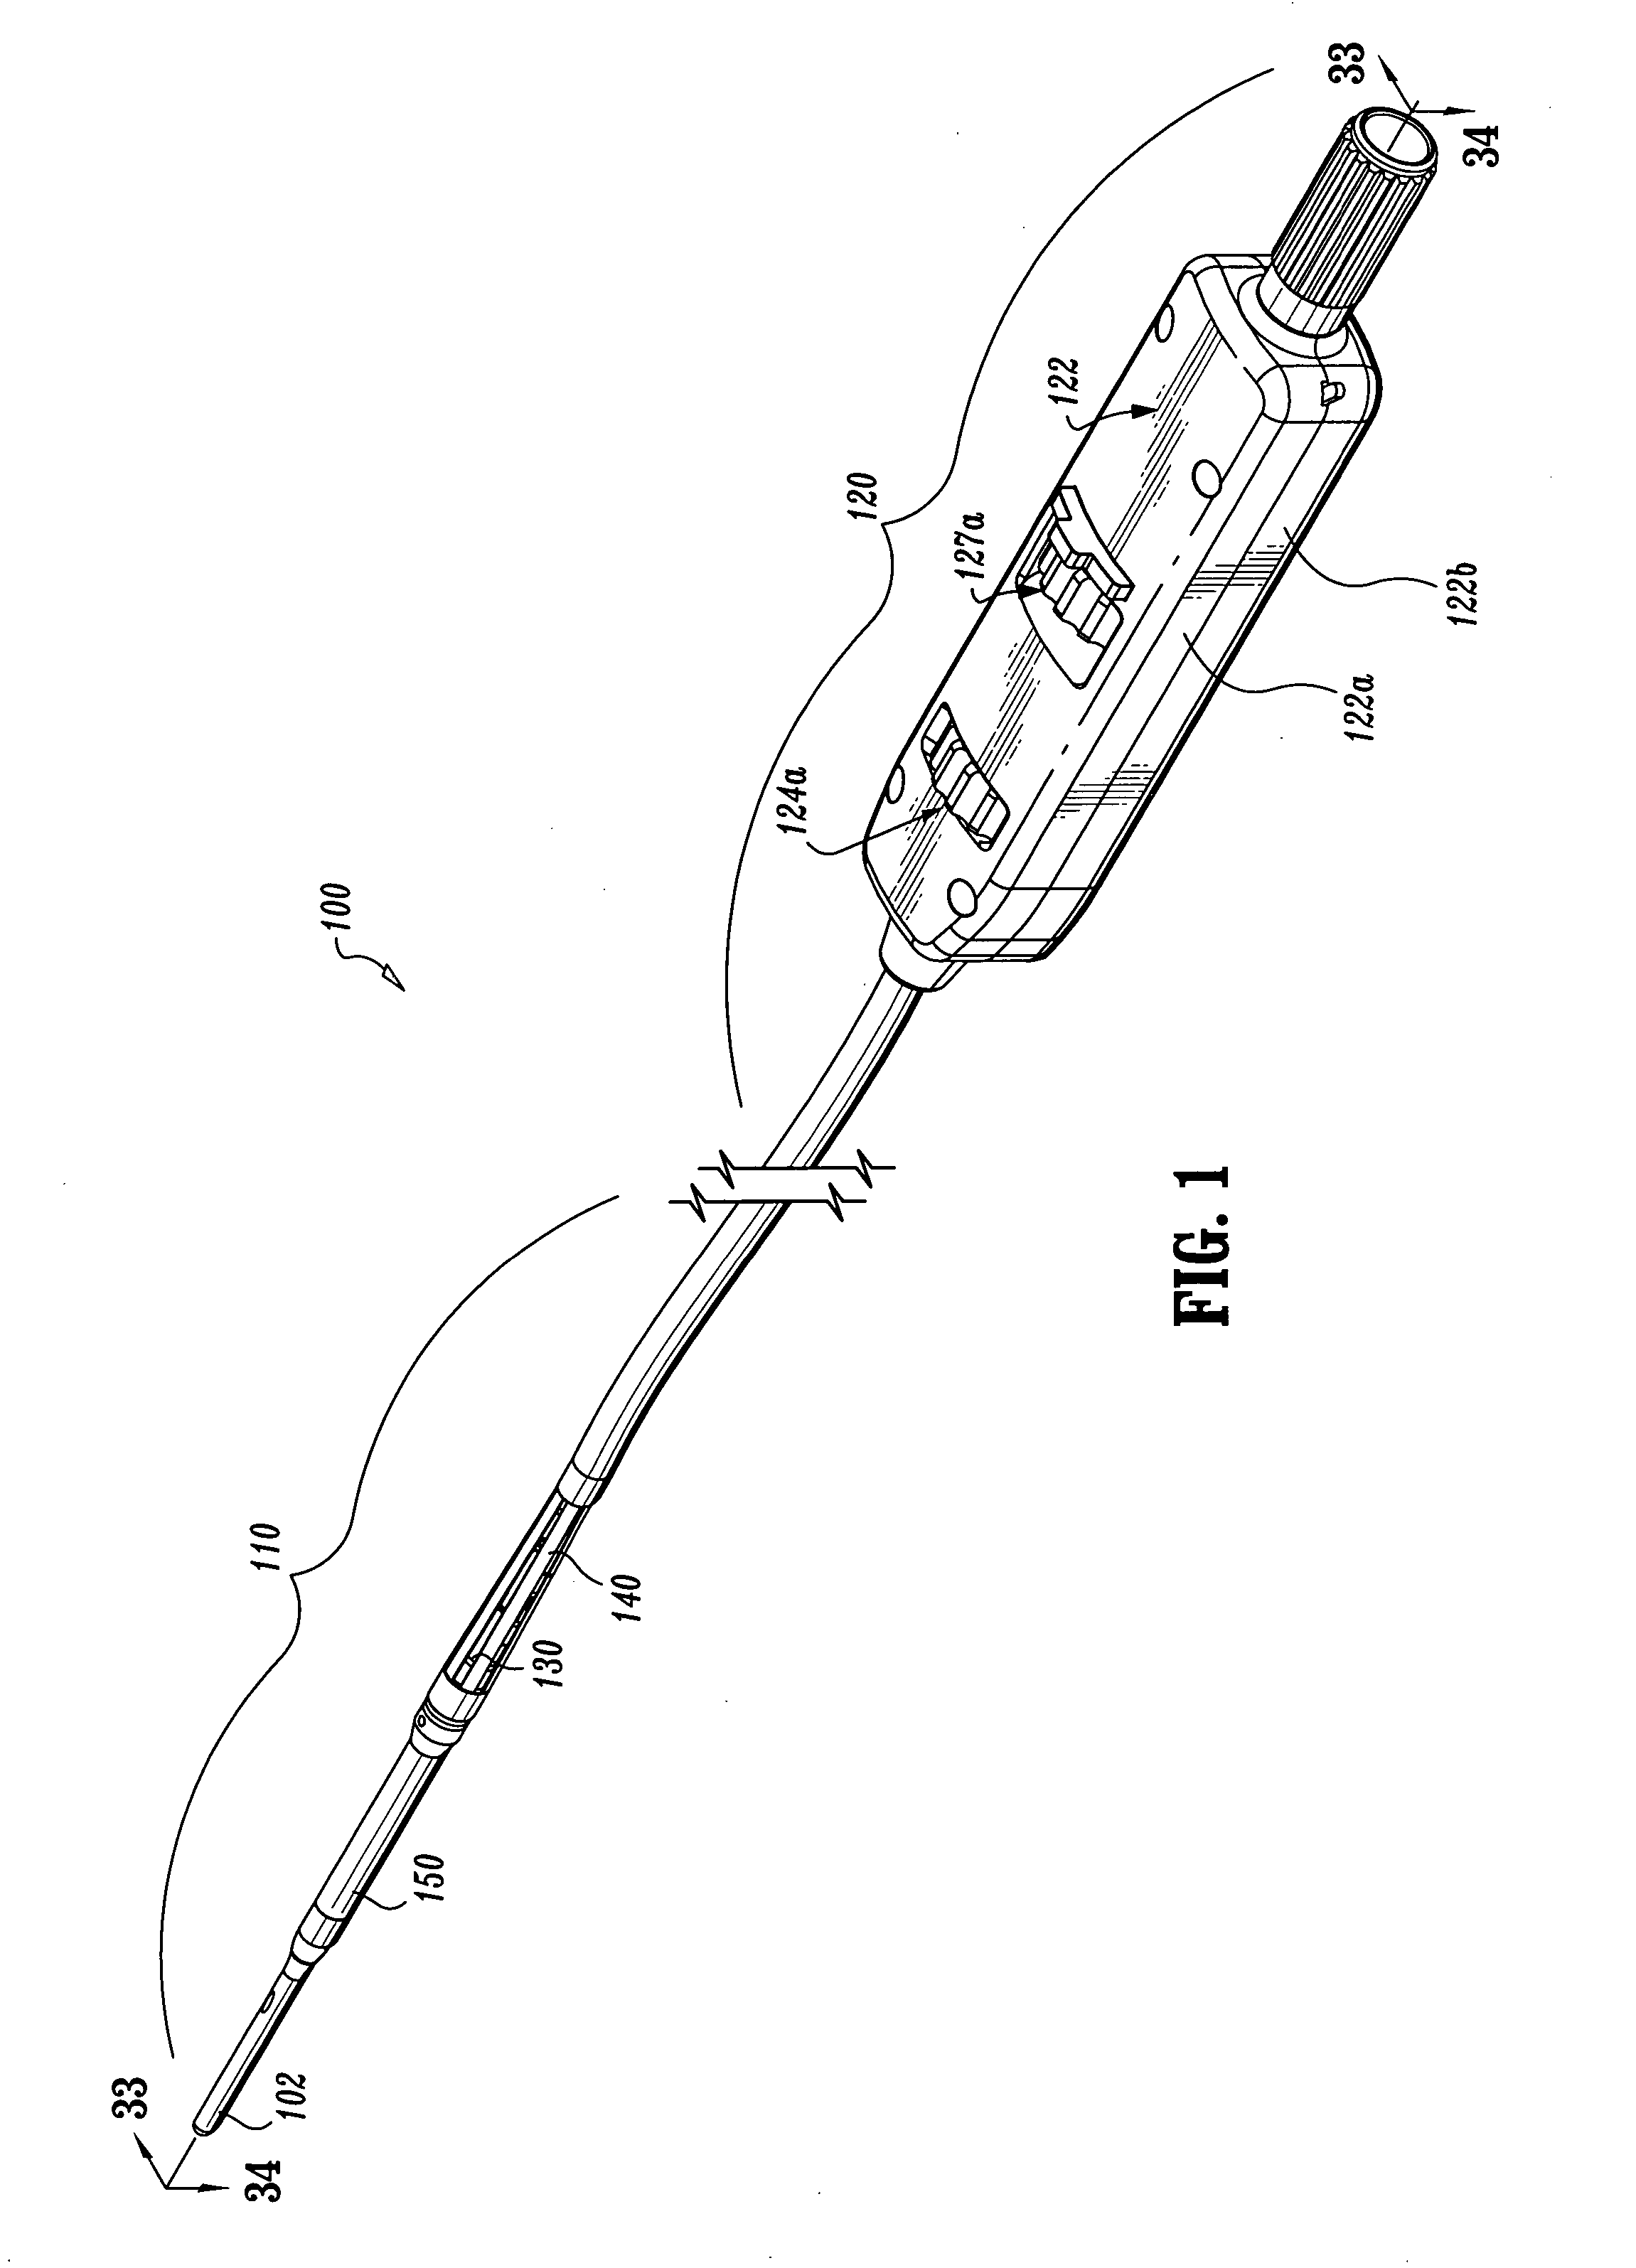 Endovascular fastener applicator